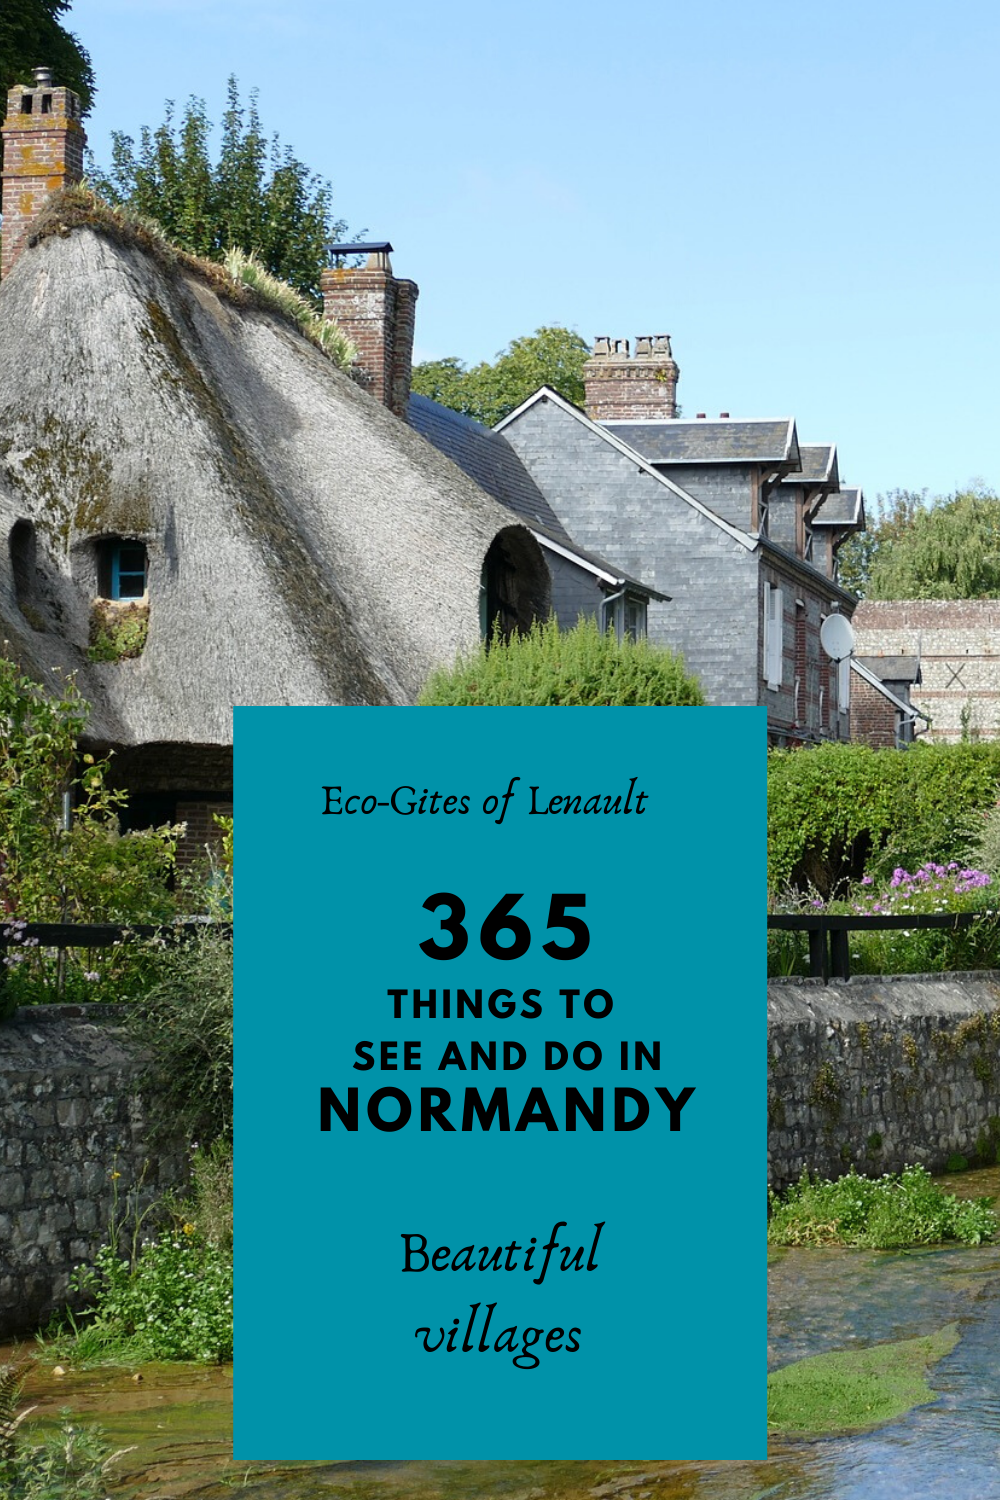 Normandy'd most beautiful villages